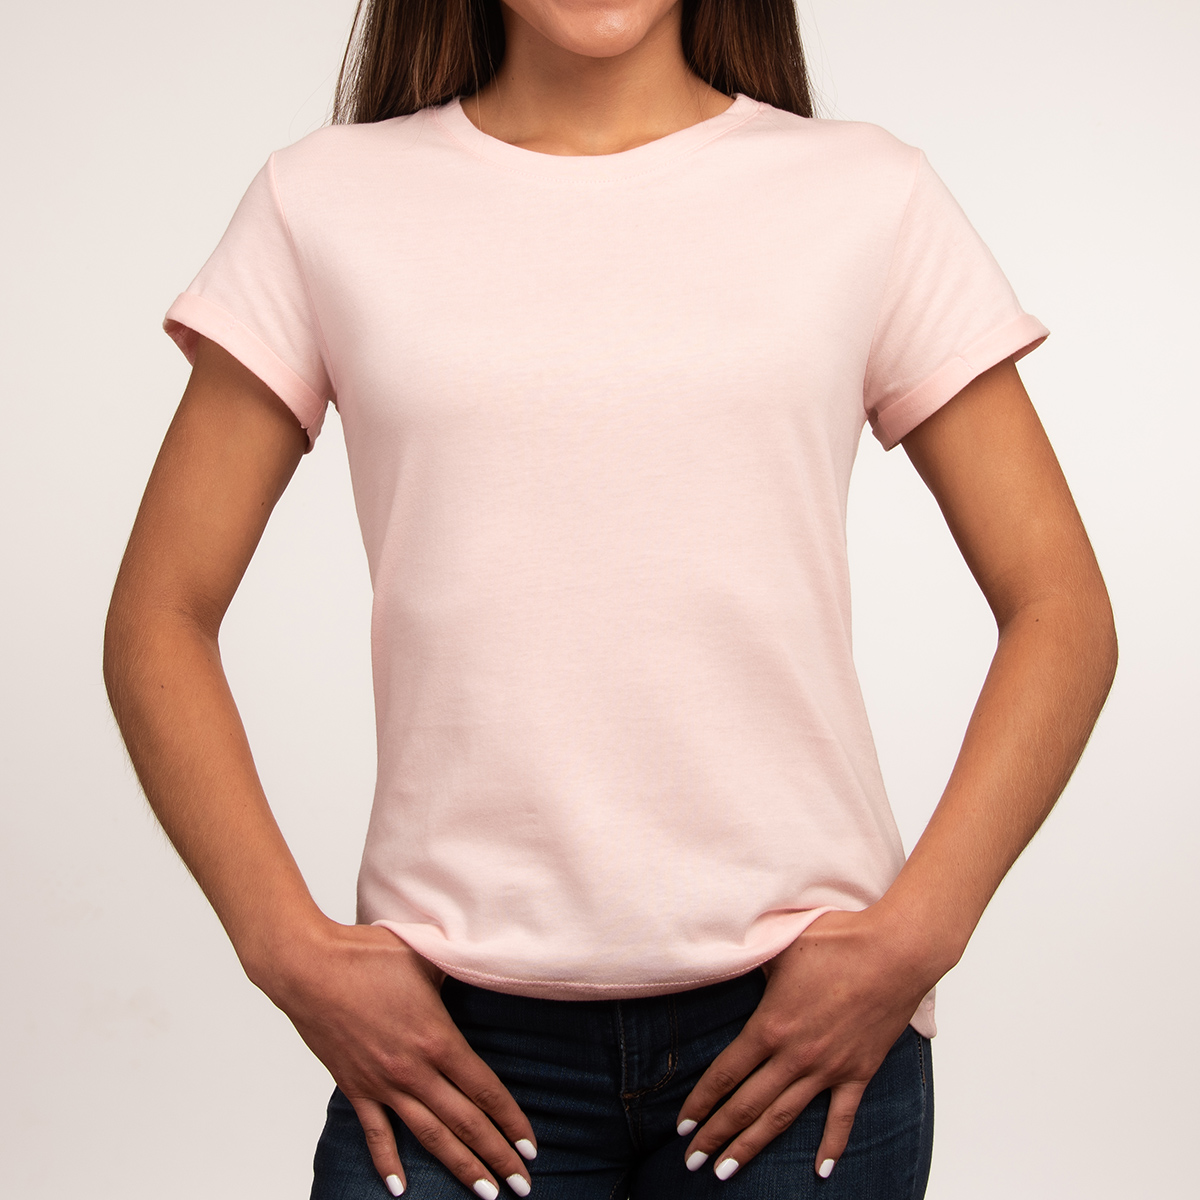 Camiseta con frase rosa mujer de acero inolvidable navy blue recoleta